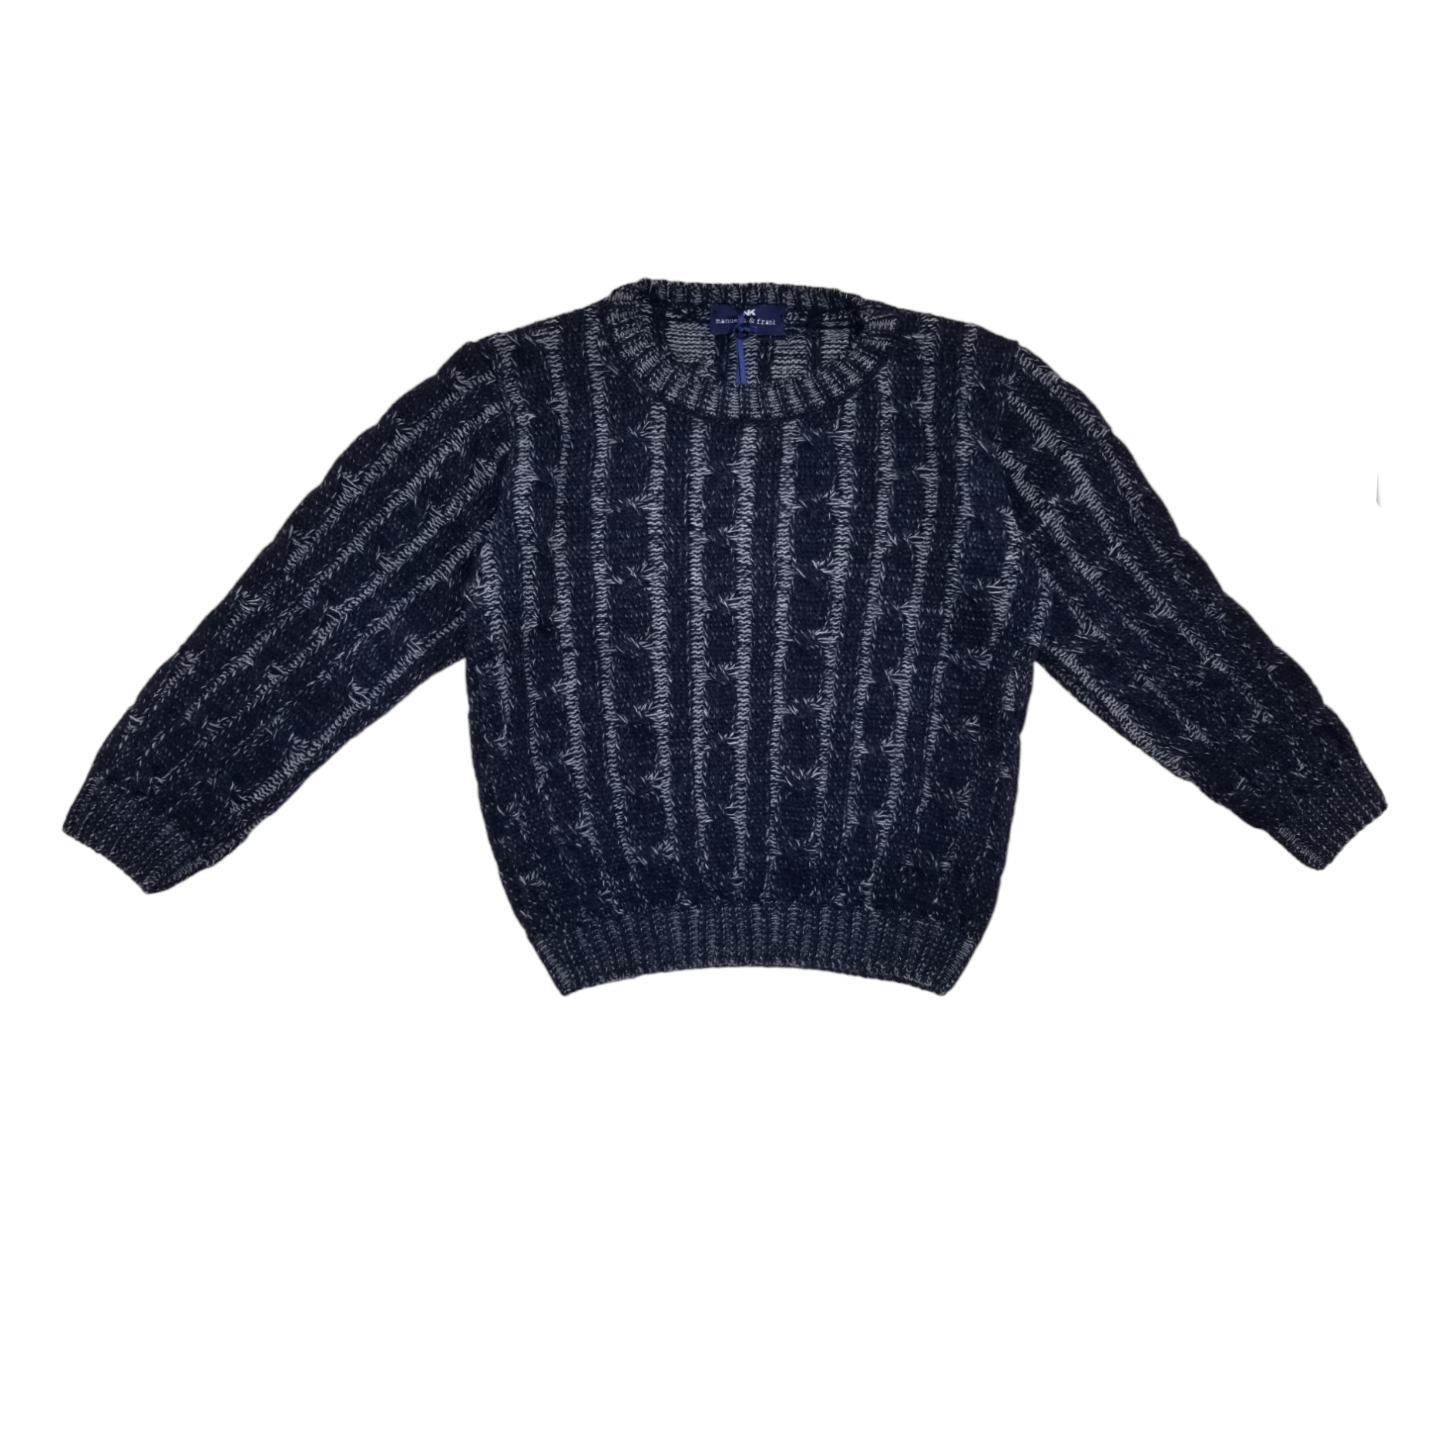 Manuelle Frank Crew Neck Sweater - Blue/grey